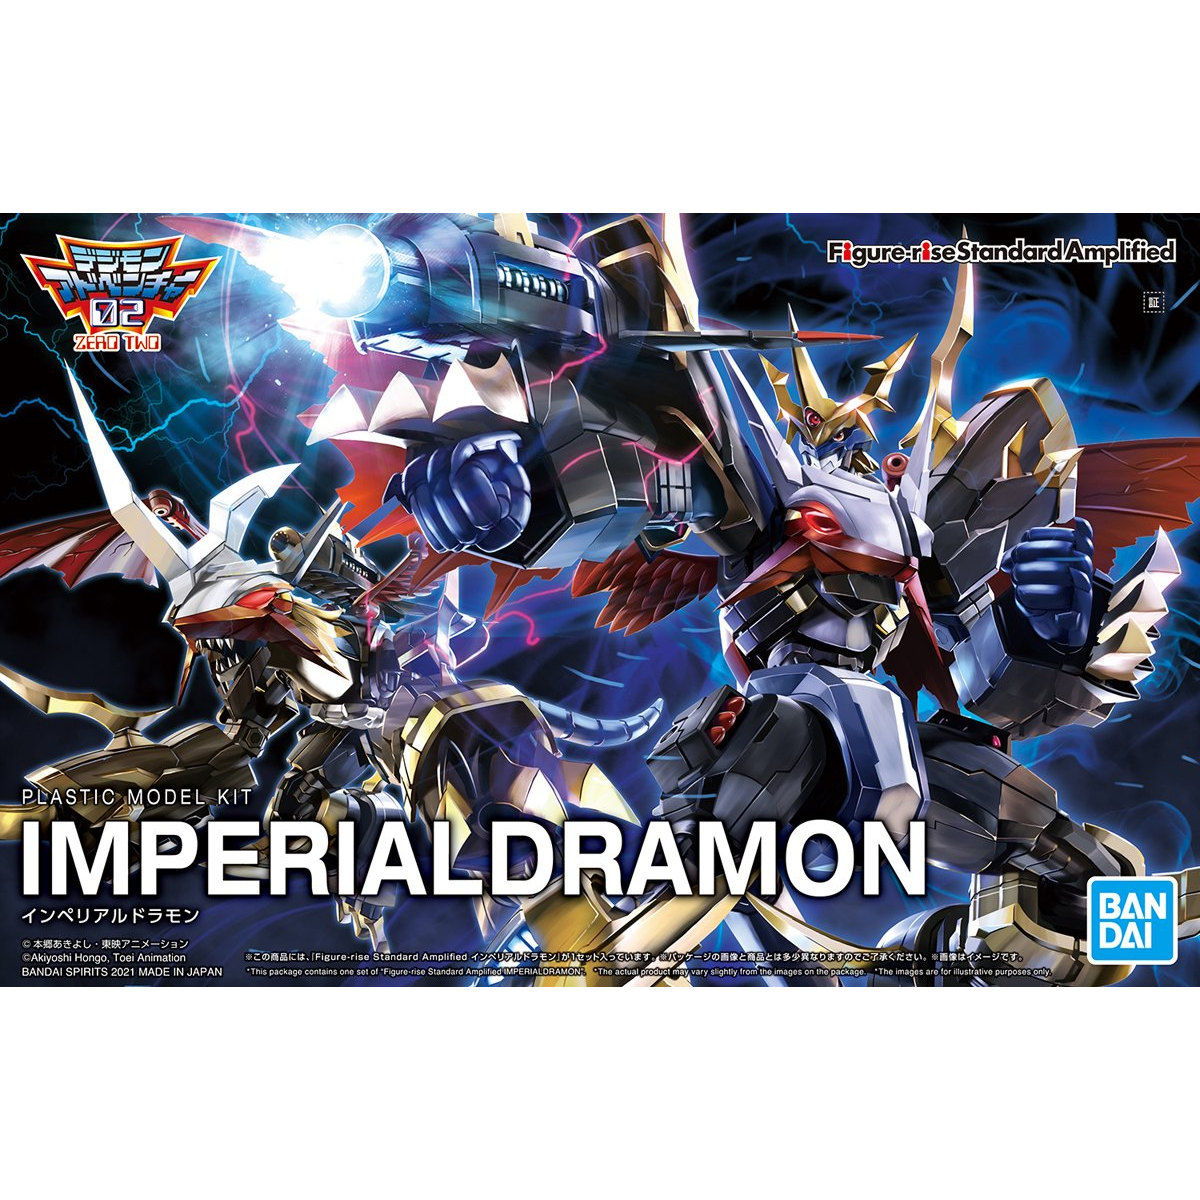 Bandai Digimon Imperialdramon Plastic Model 2535726 for sale online 